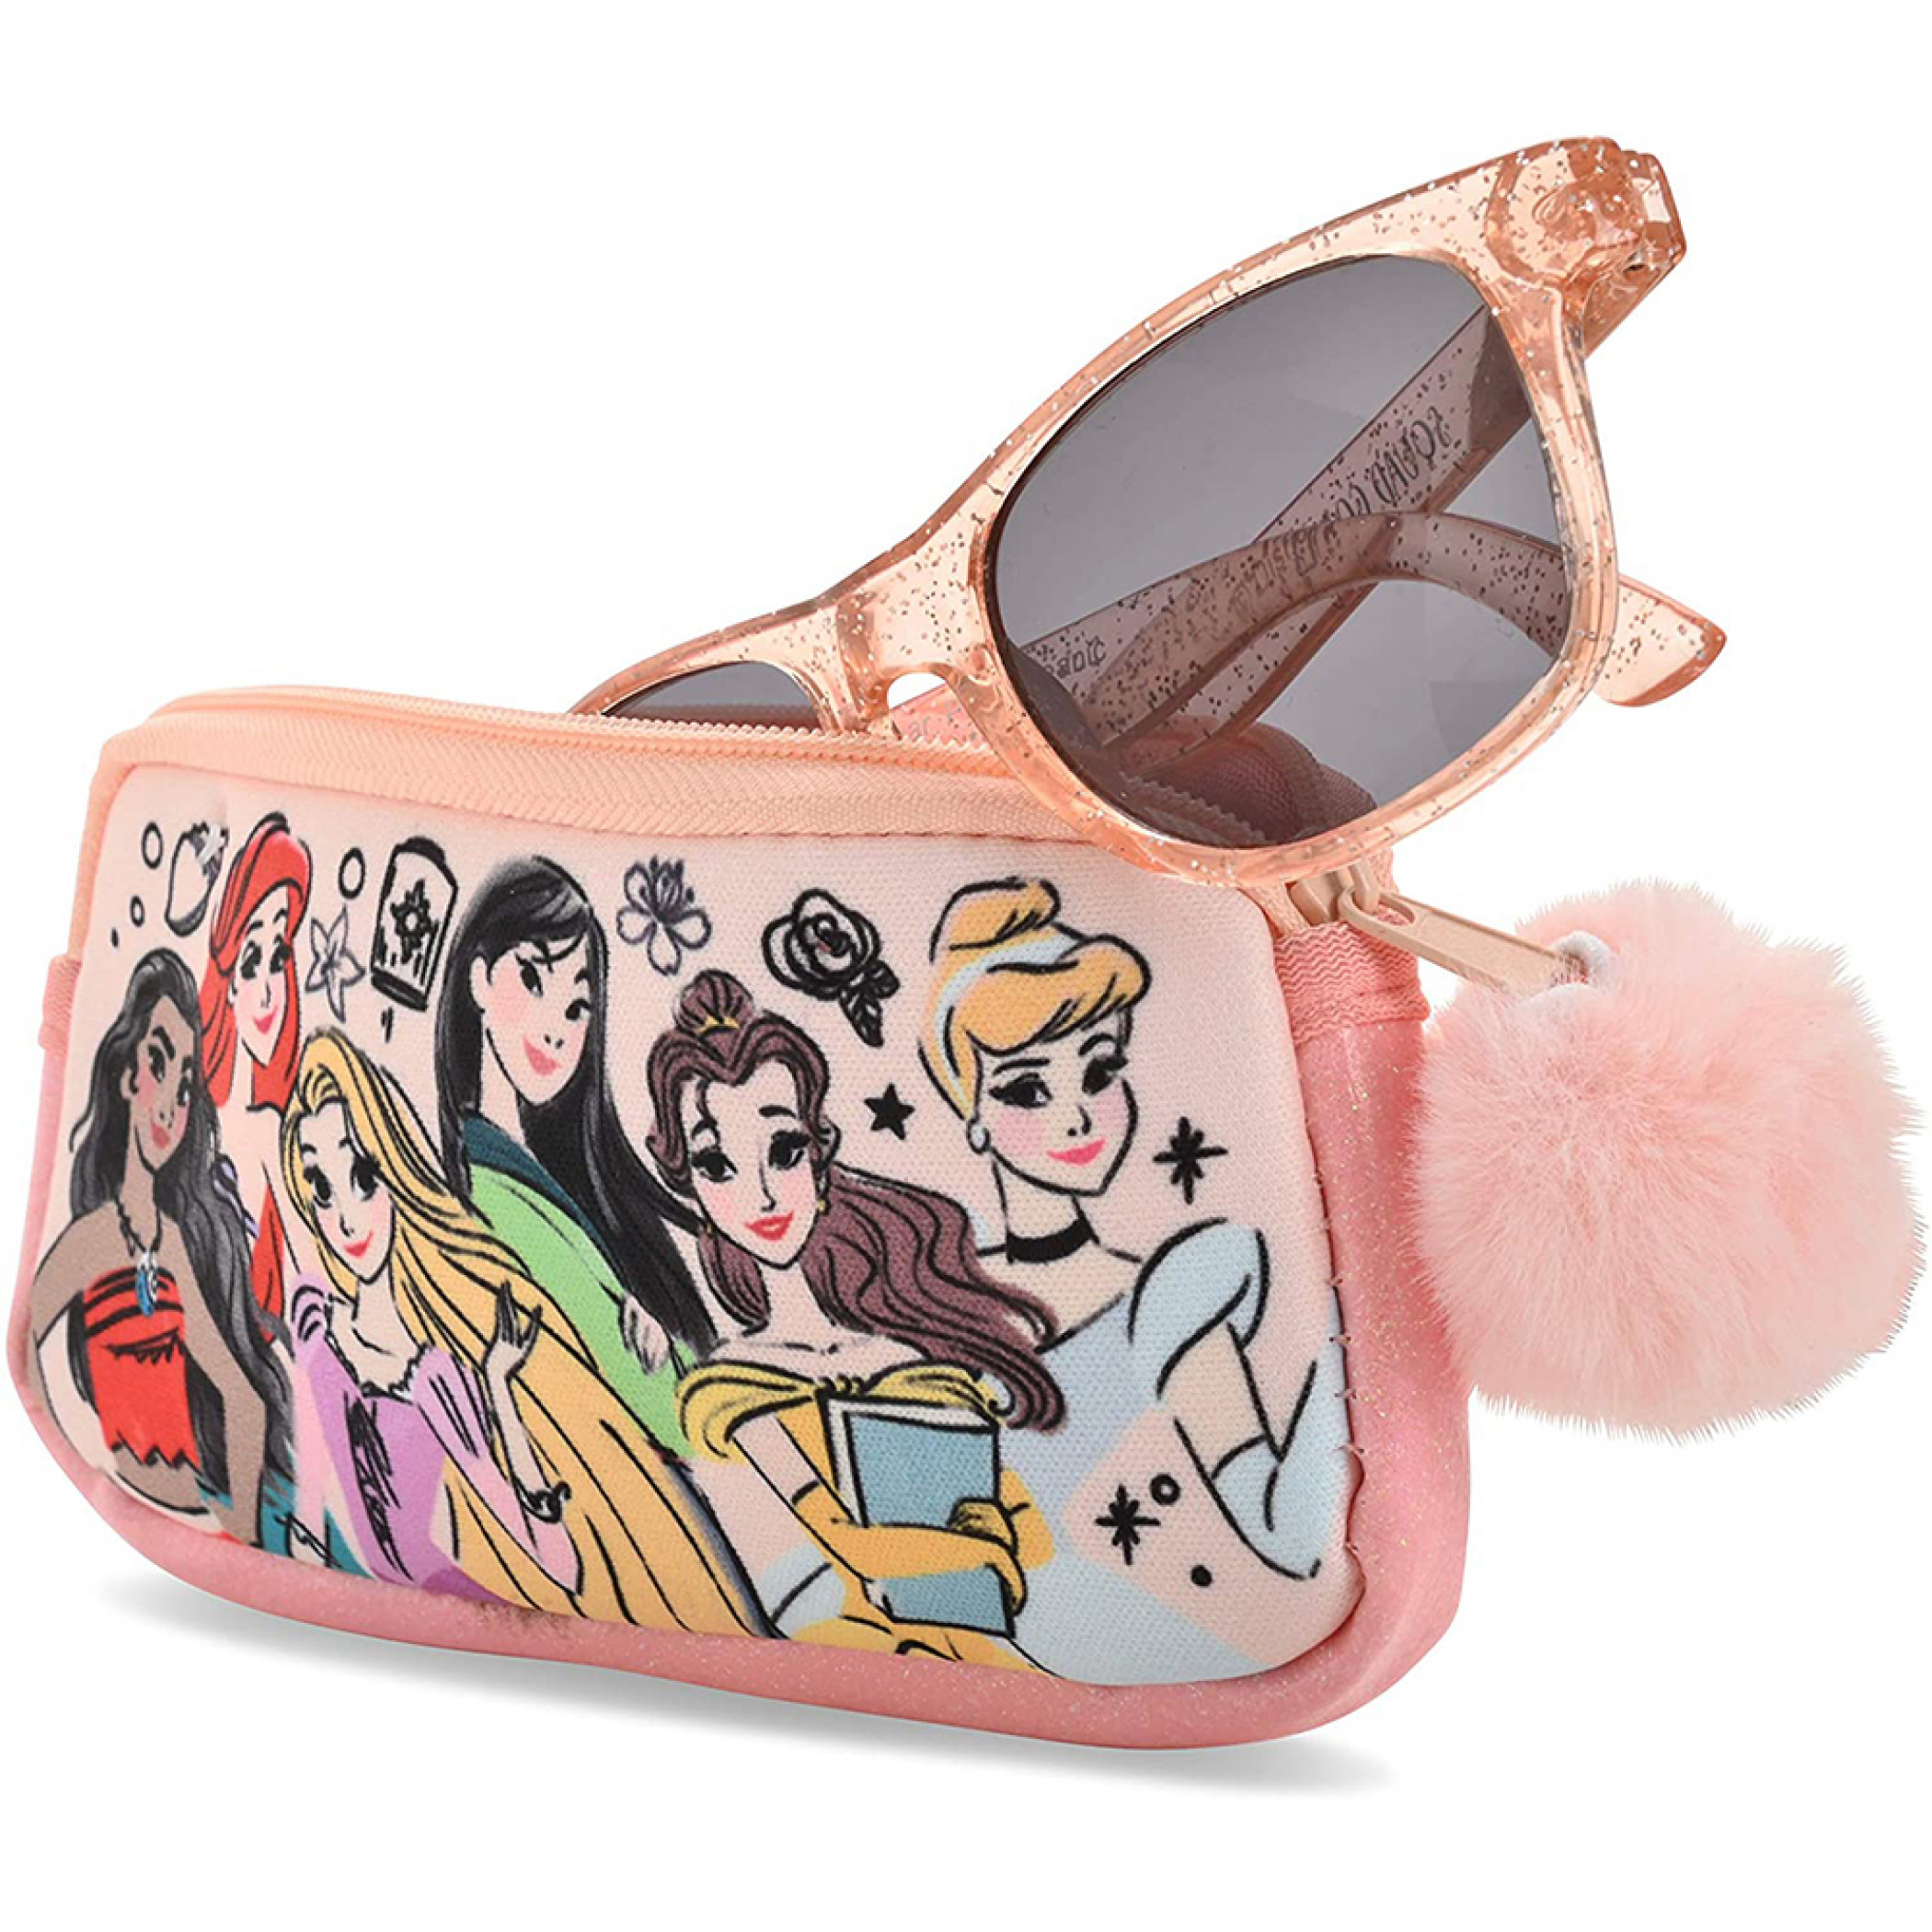 Disney Princesses Characters Girls Sunglasses w/ Pom Pom Pouch Set